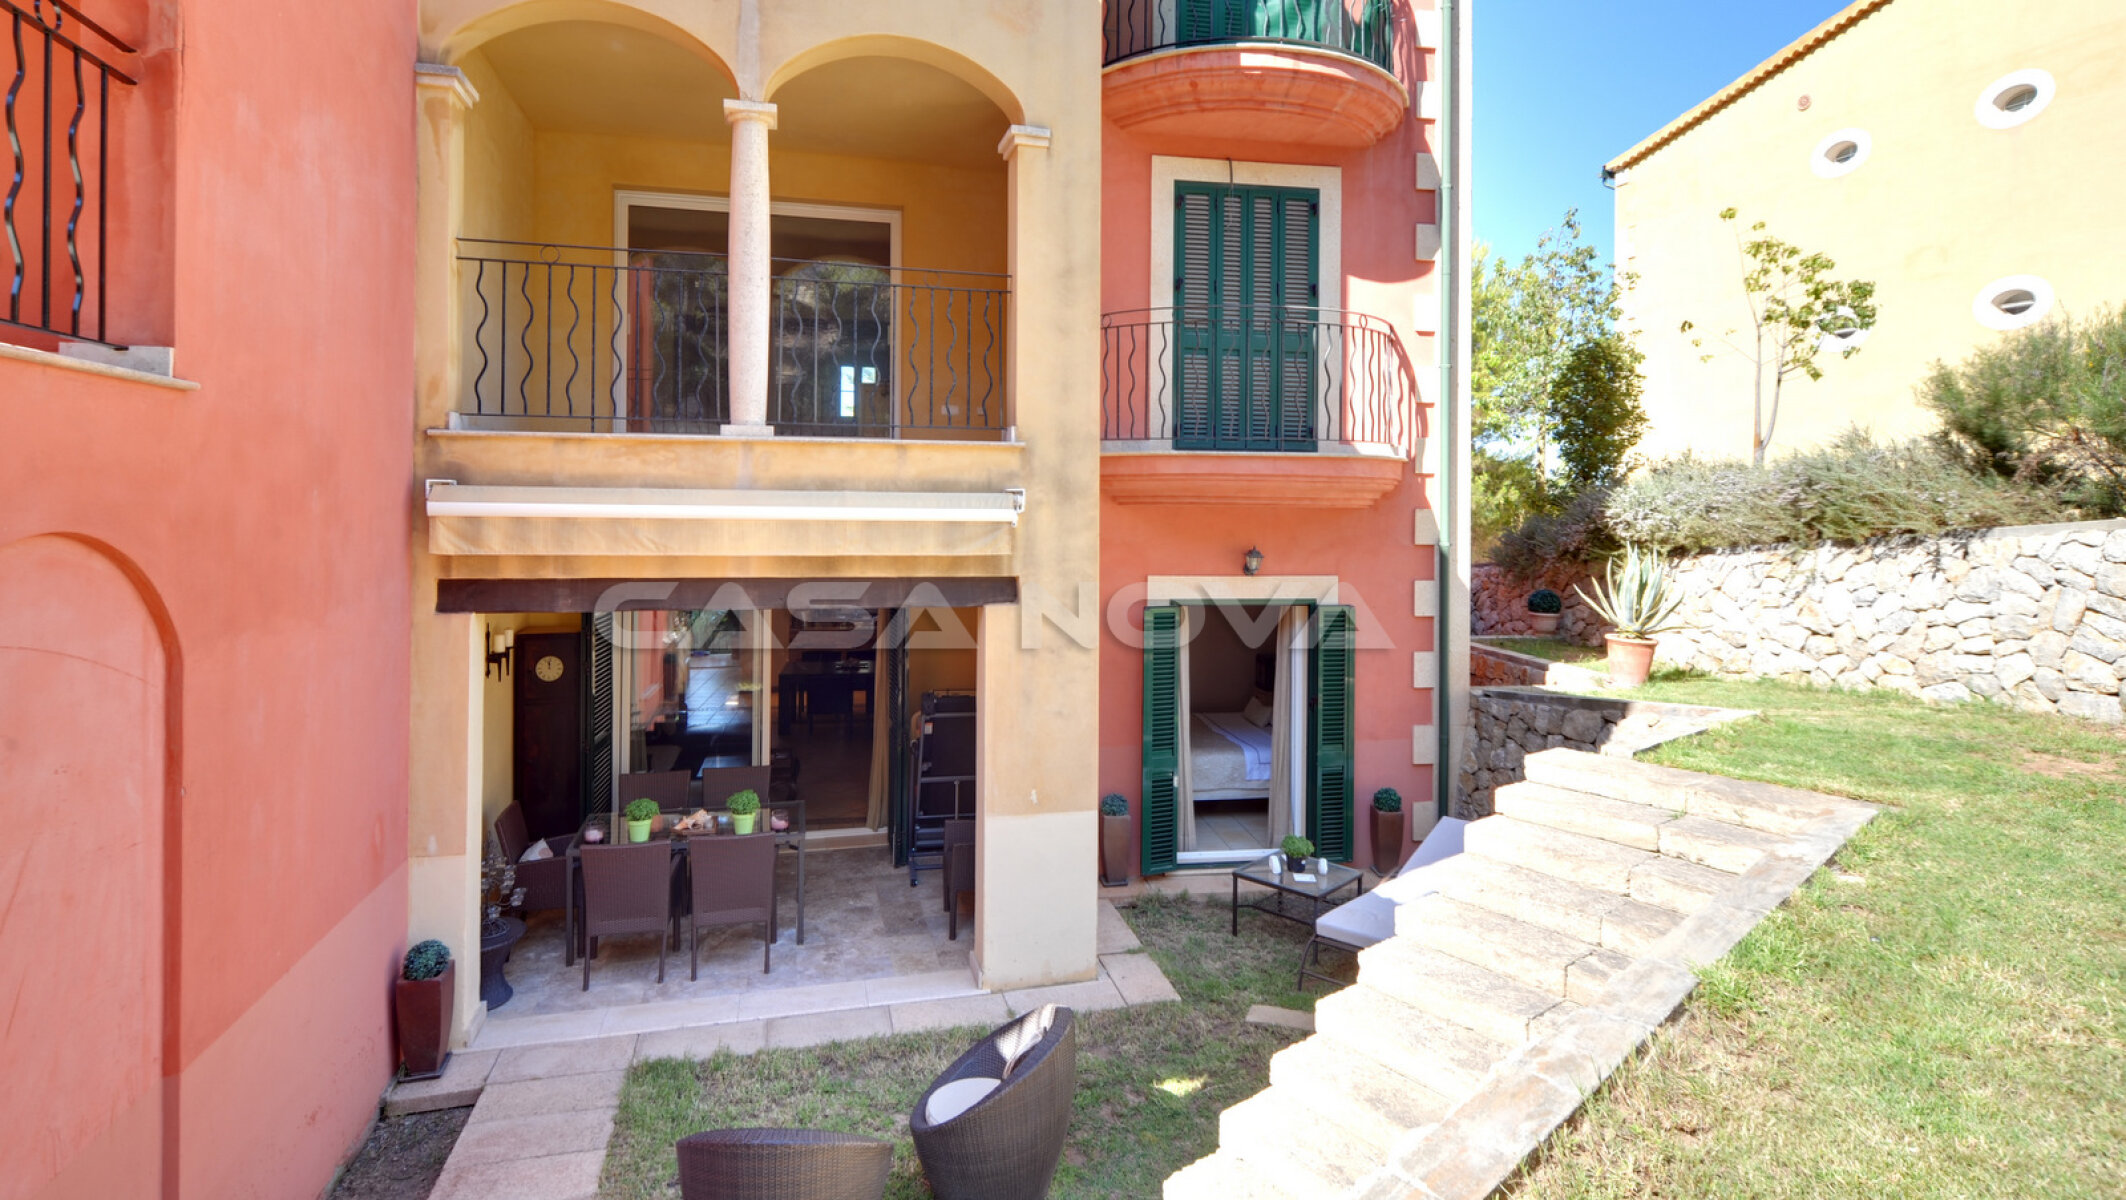 Mallorca properties beautiful, well-tended garden apartment